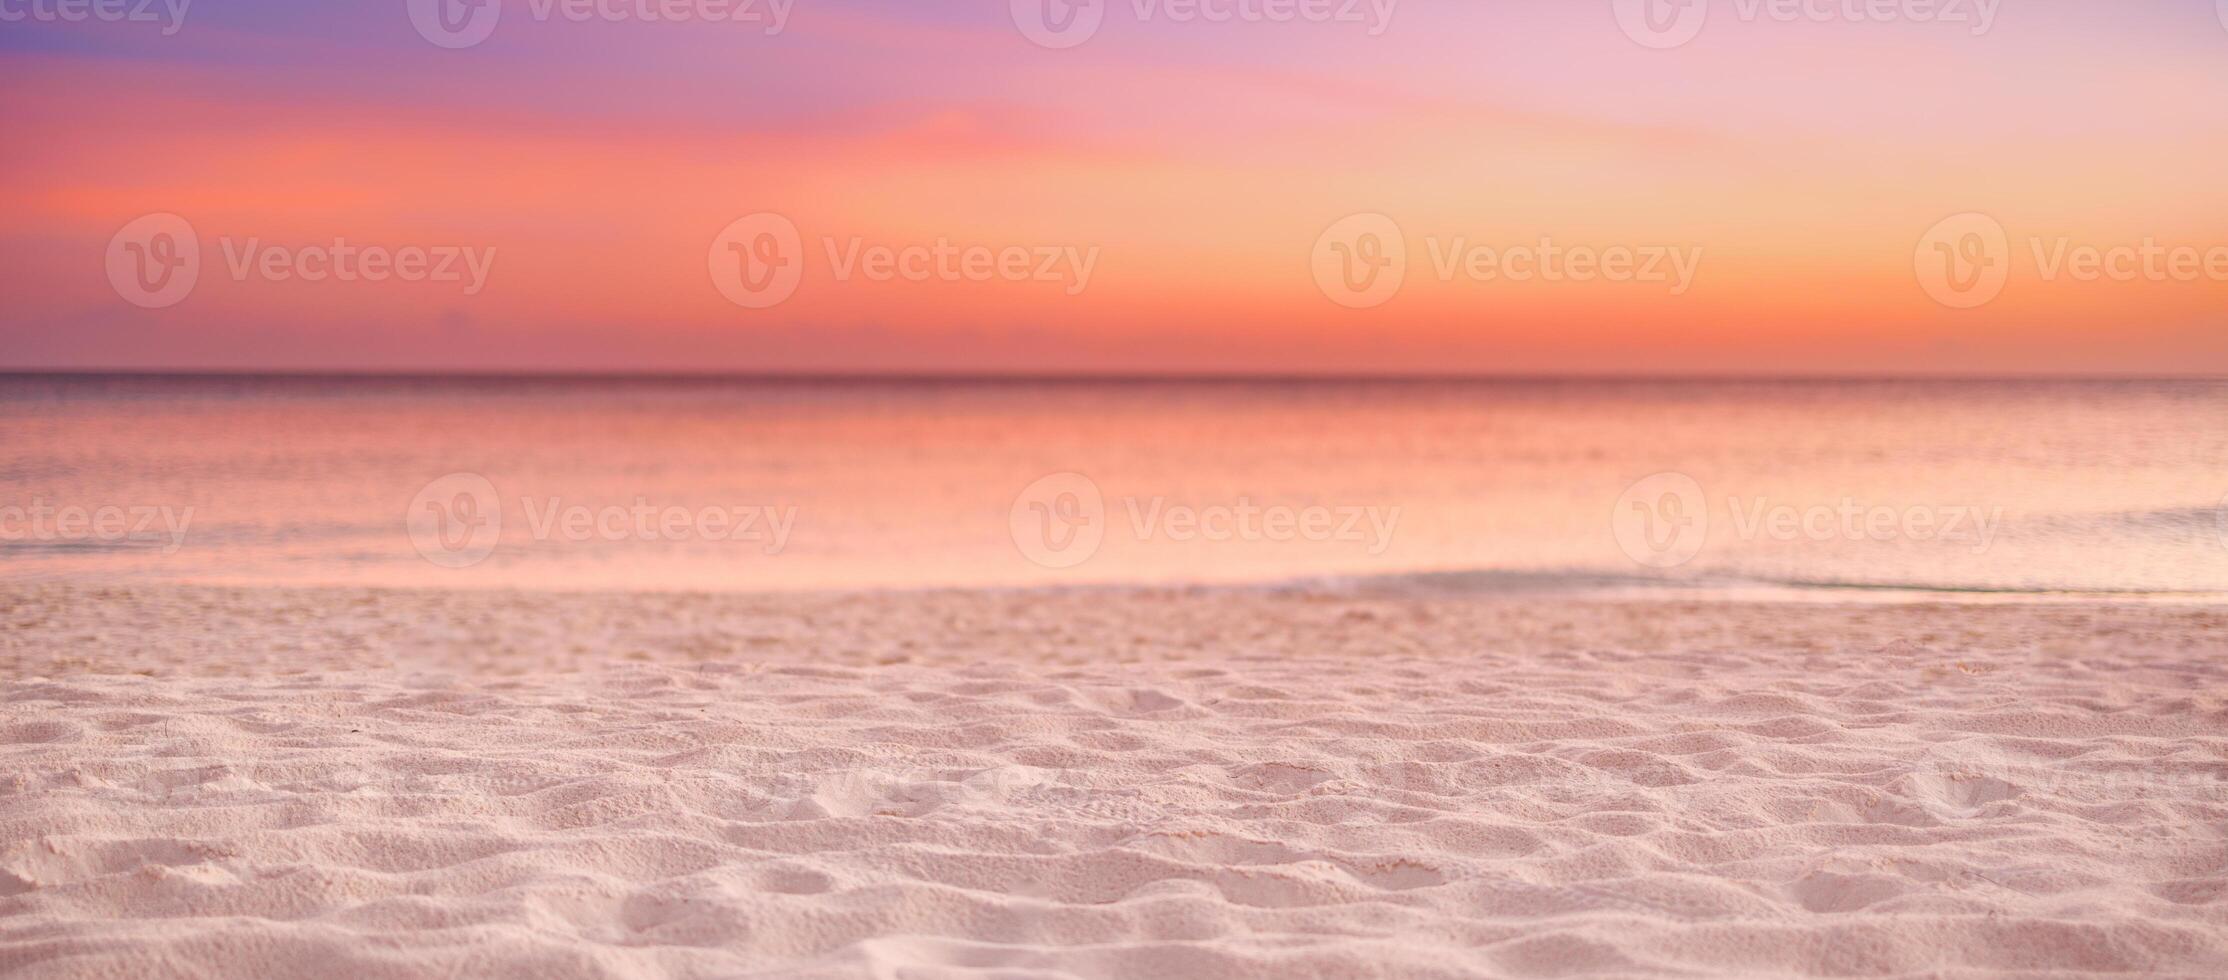 Closeup sea sand beach. Panoramic beach landscape. Inspire calm tropical seascape horizon. Colorful sunset sky clouds tranquil relax sunlight summer sunrise mood. Vacation travel holiday destination photo